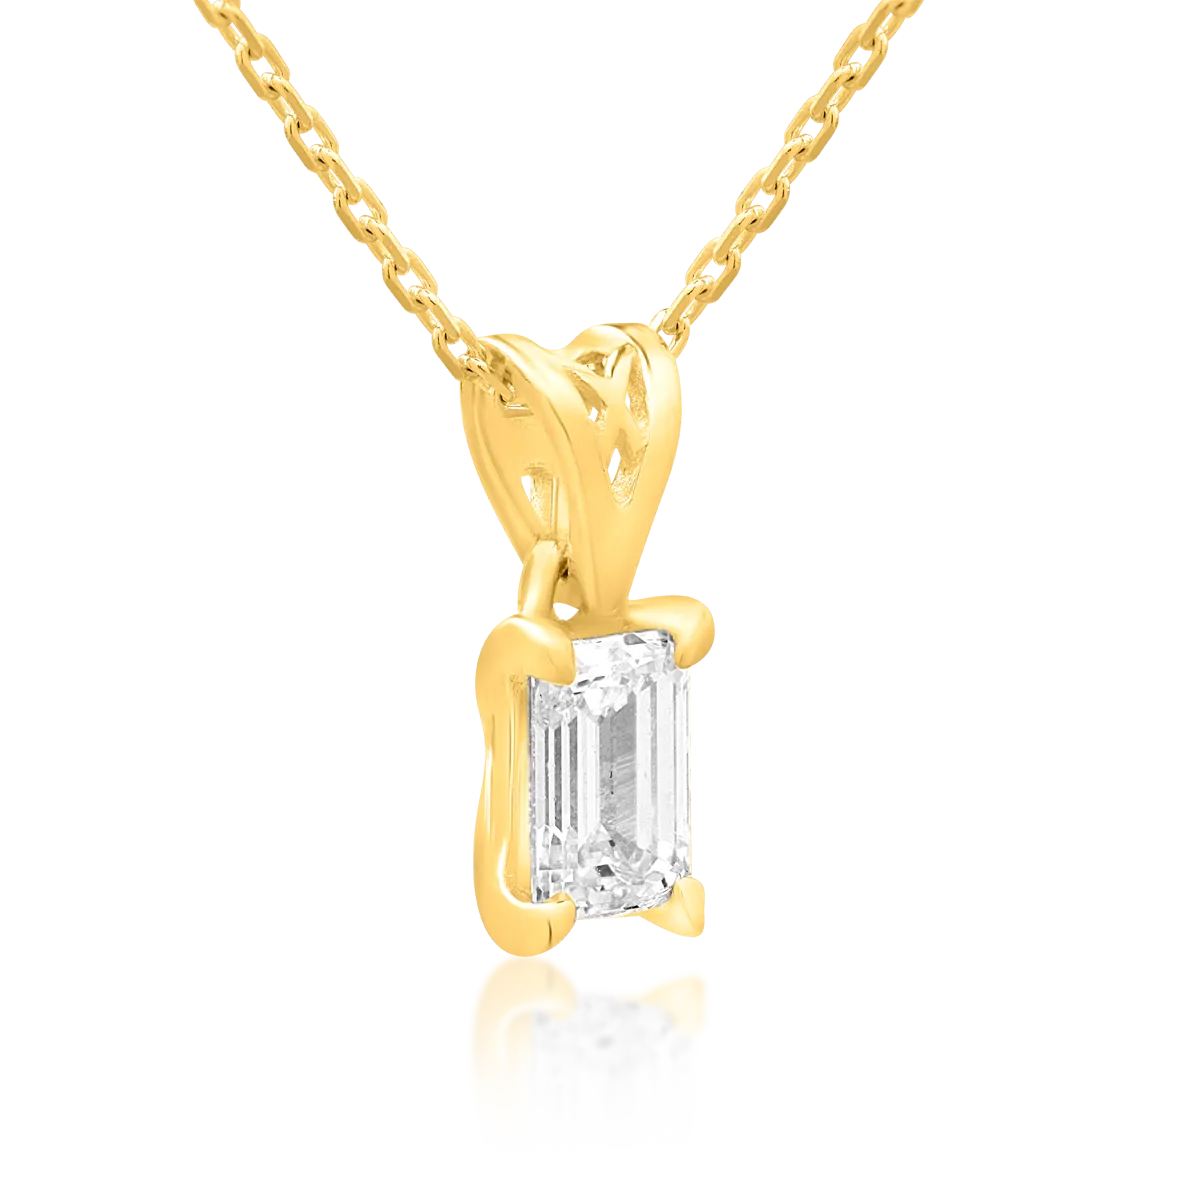 18K yellow gold chain with 0.4ct diamond pendant